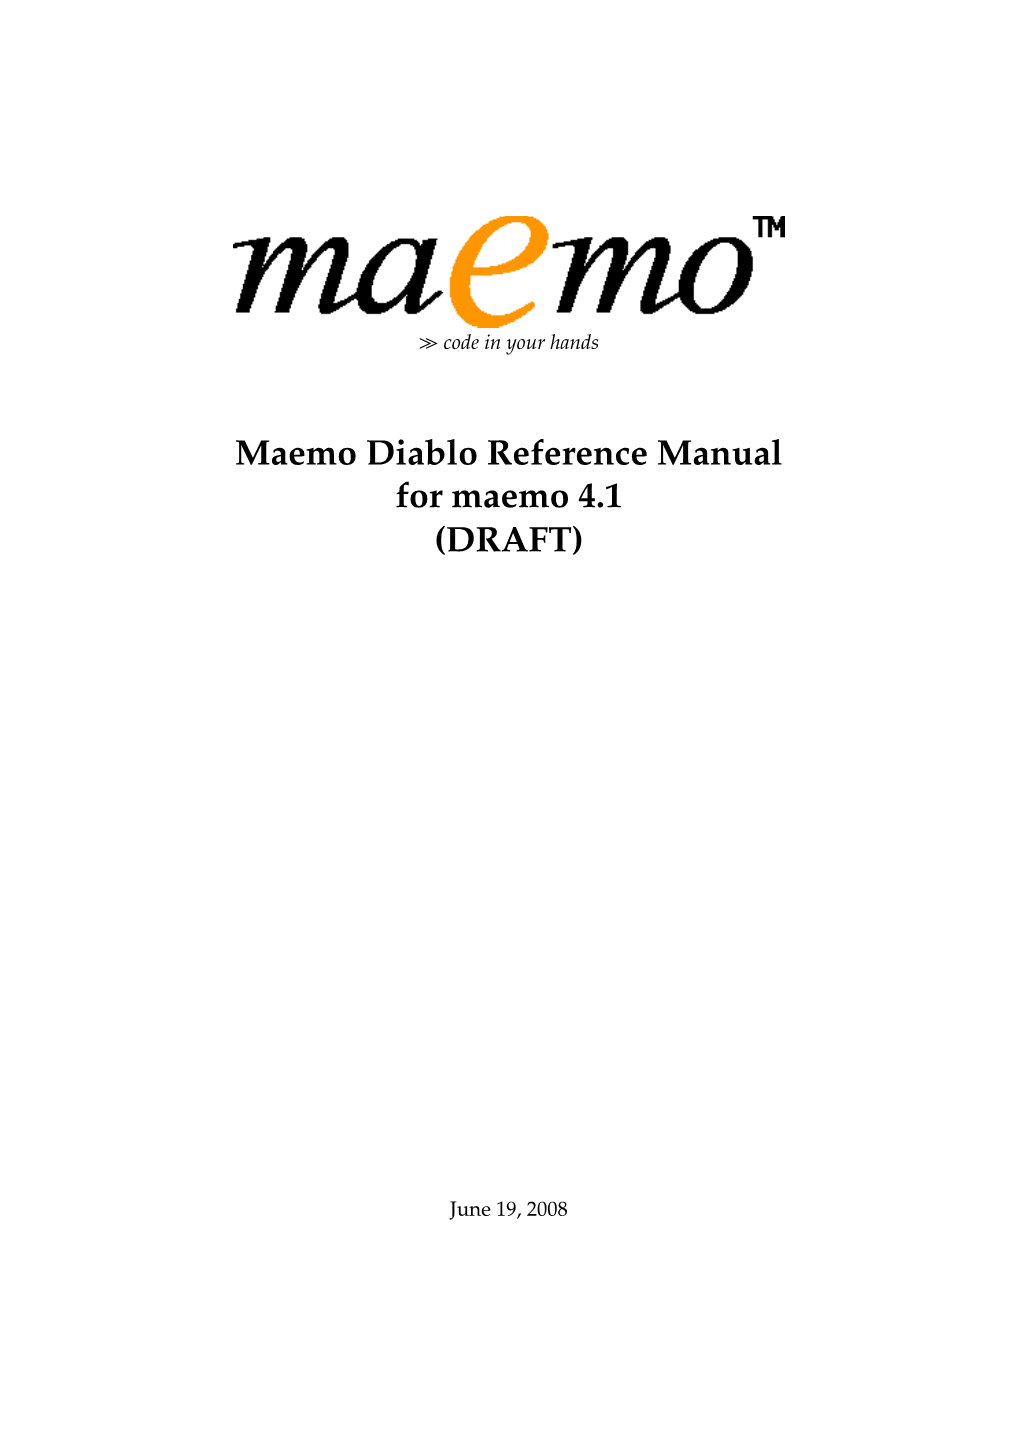 Maemo Diablo Reference Manual for Maemo 4.1 (DRAFT)